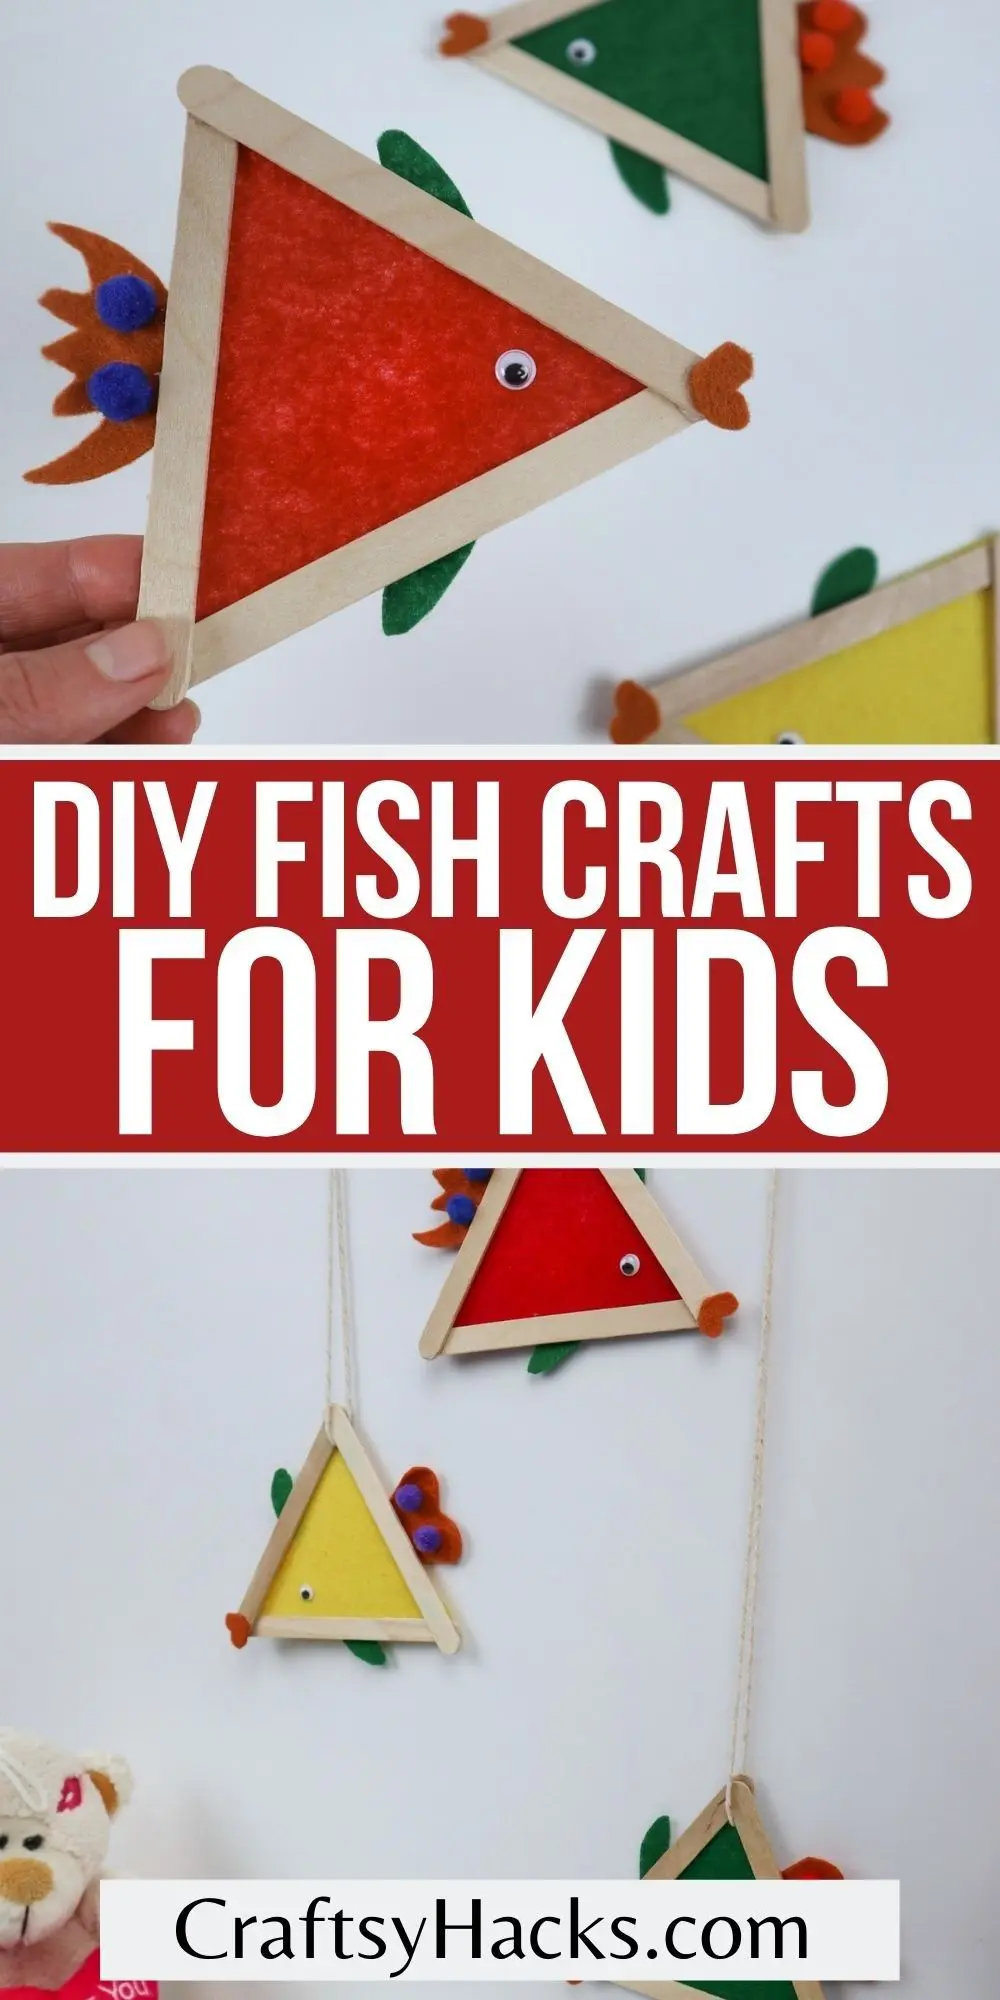 diy fish crafts for kids pin